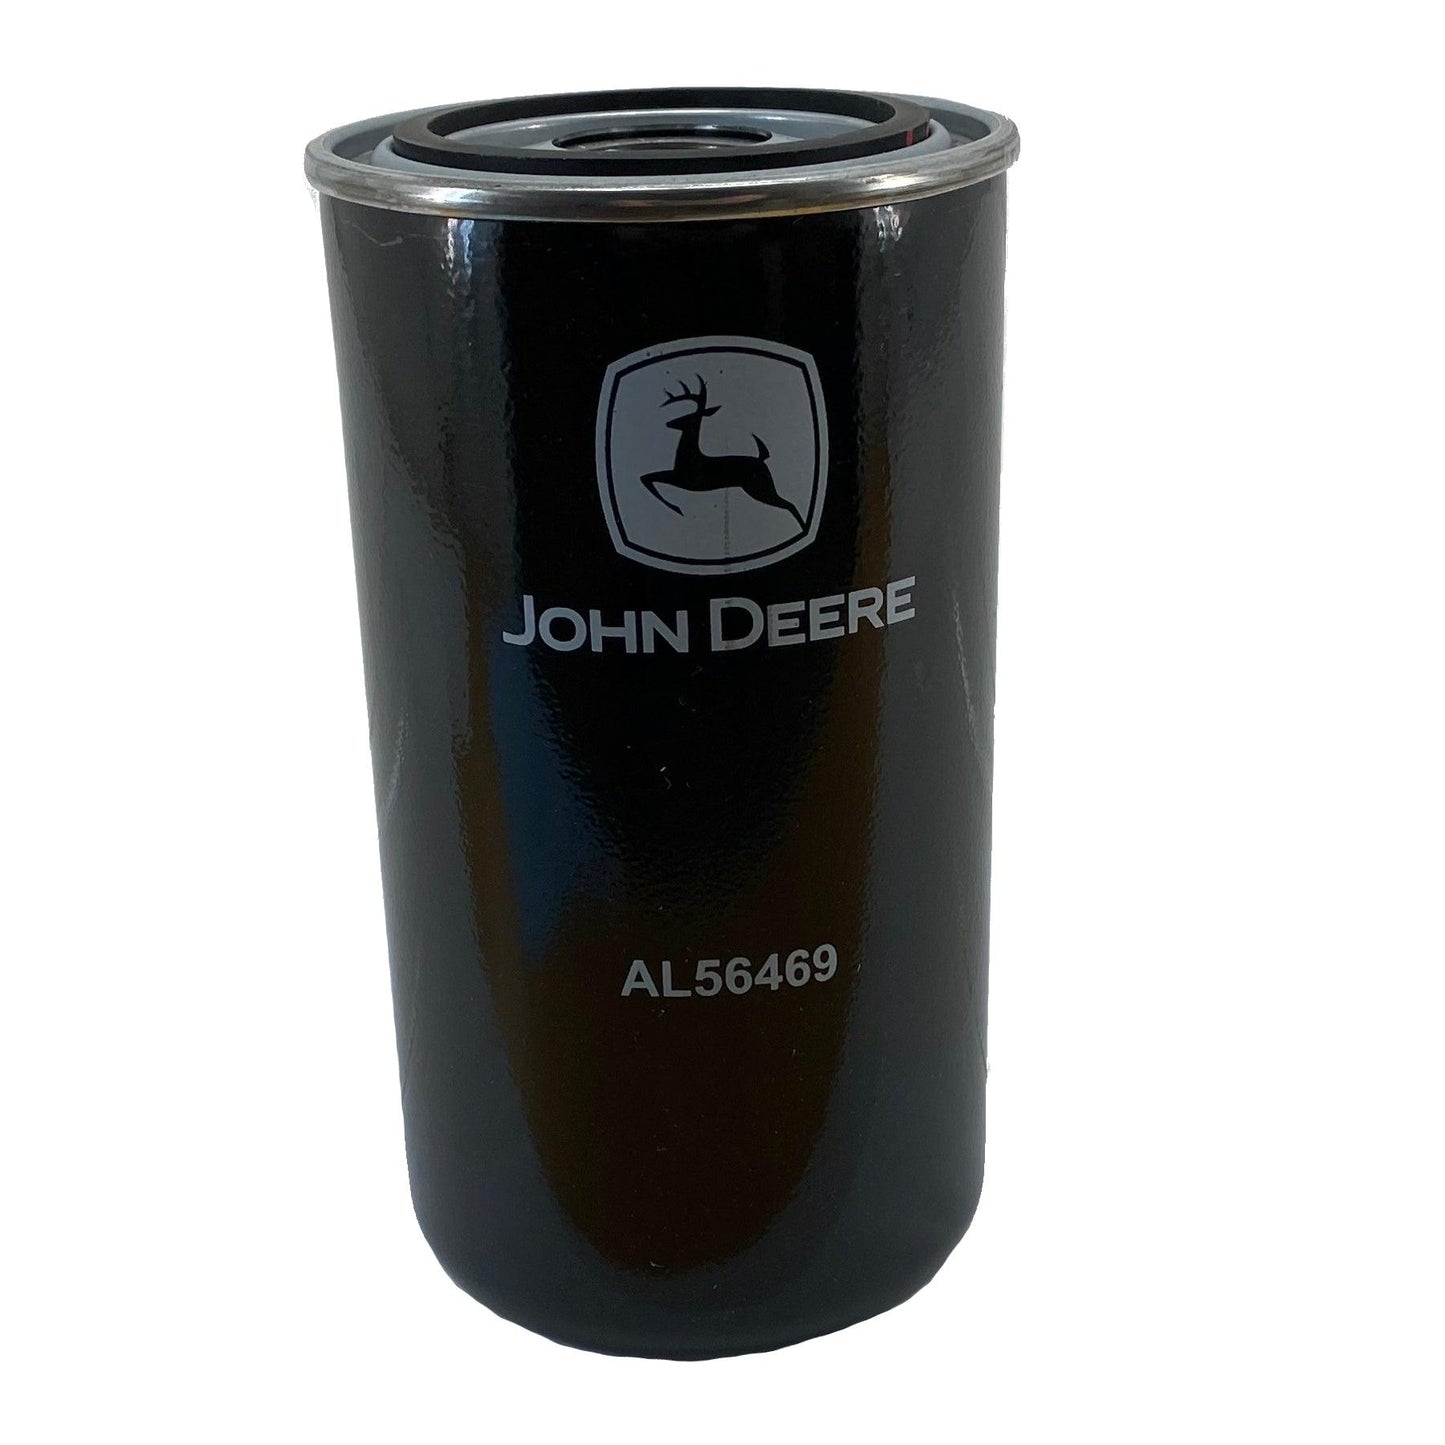 John Deere Original Equipment Filter Element - AL56469